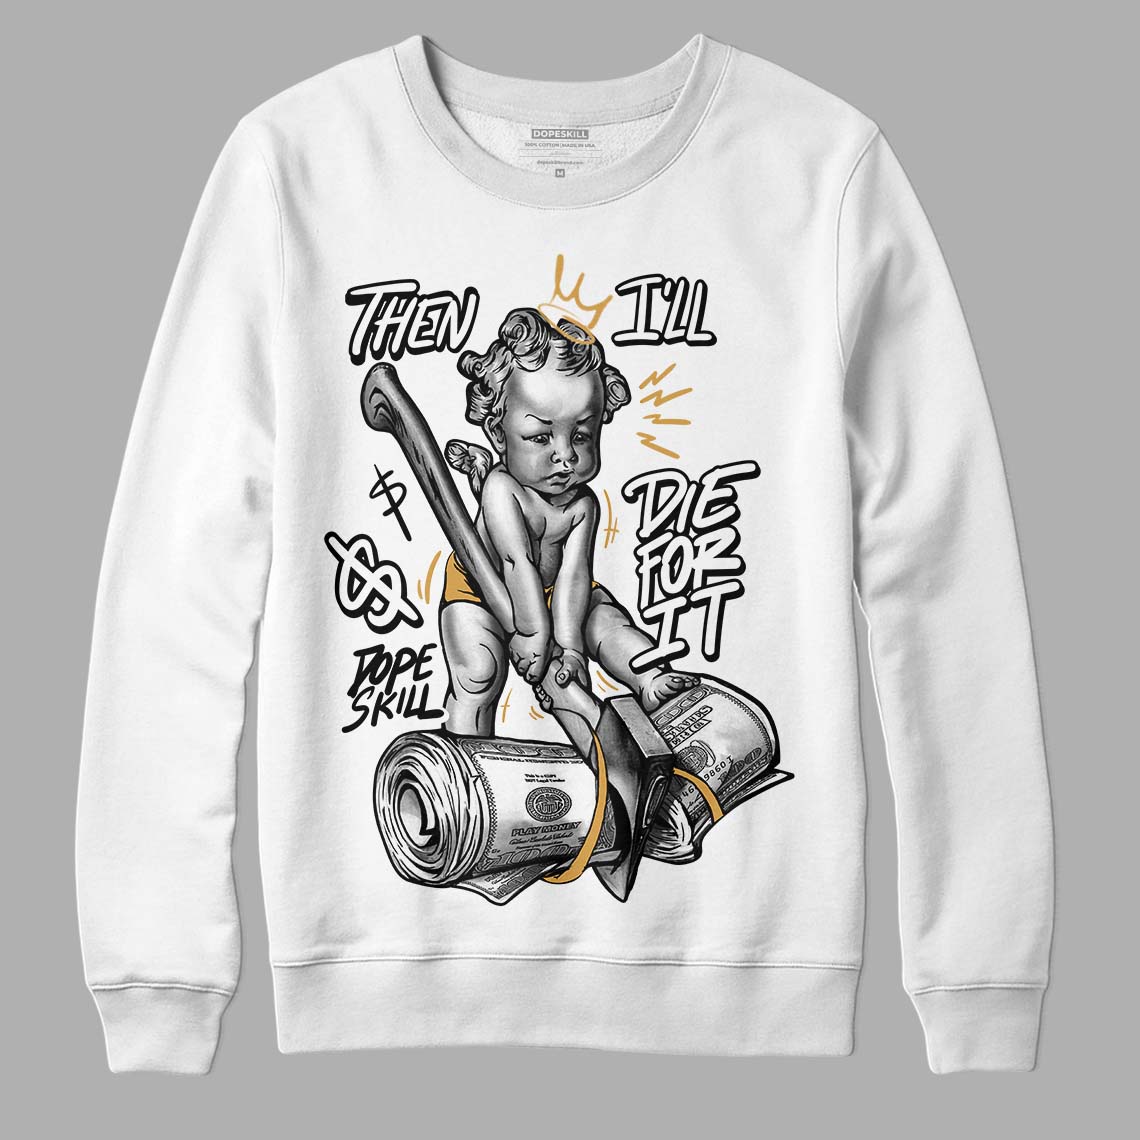 Jordan 11 "Gratitude" DopeSkill Sweatshirt Then I'll Die For It Graphic Streetwear - WHite